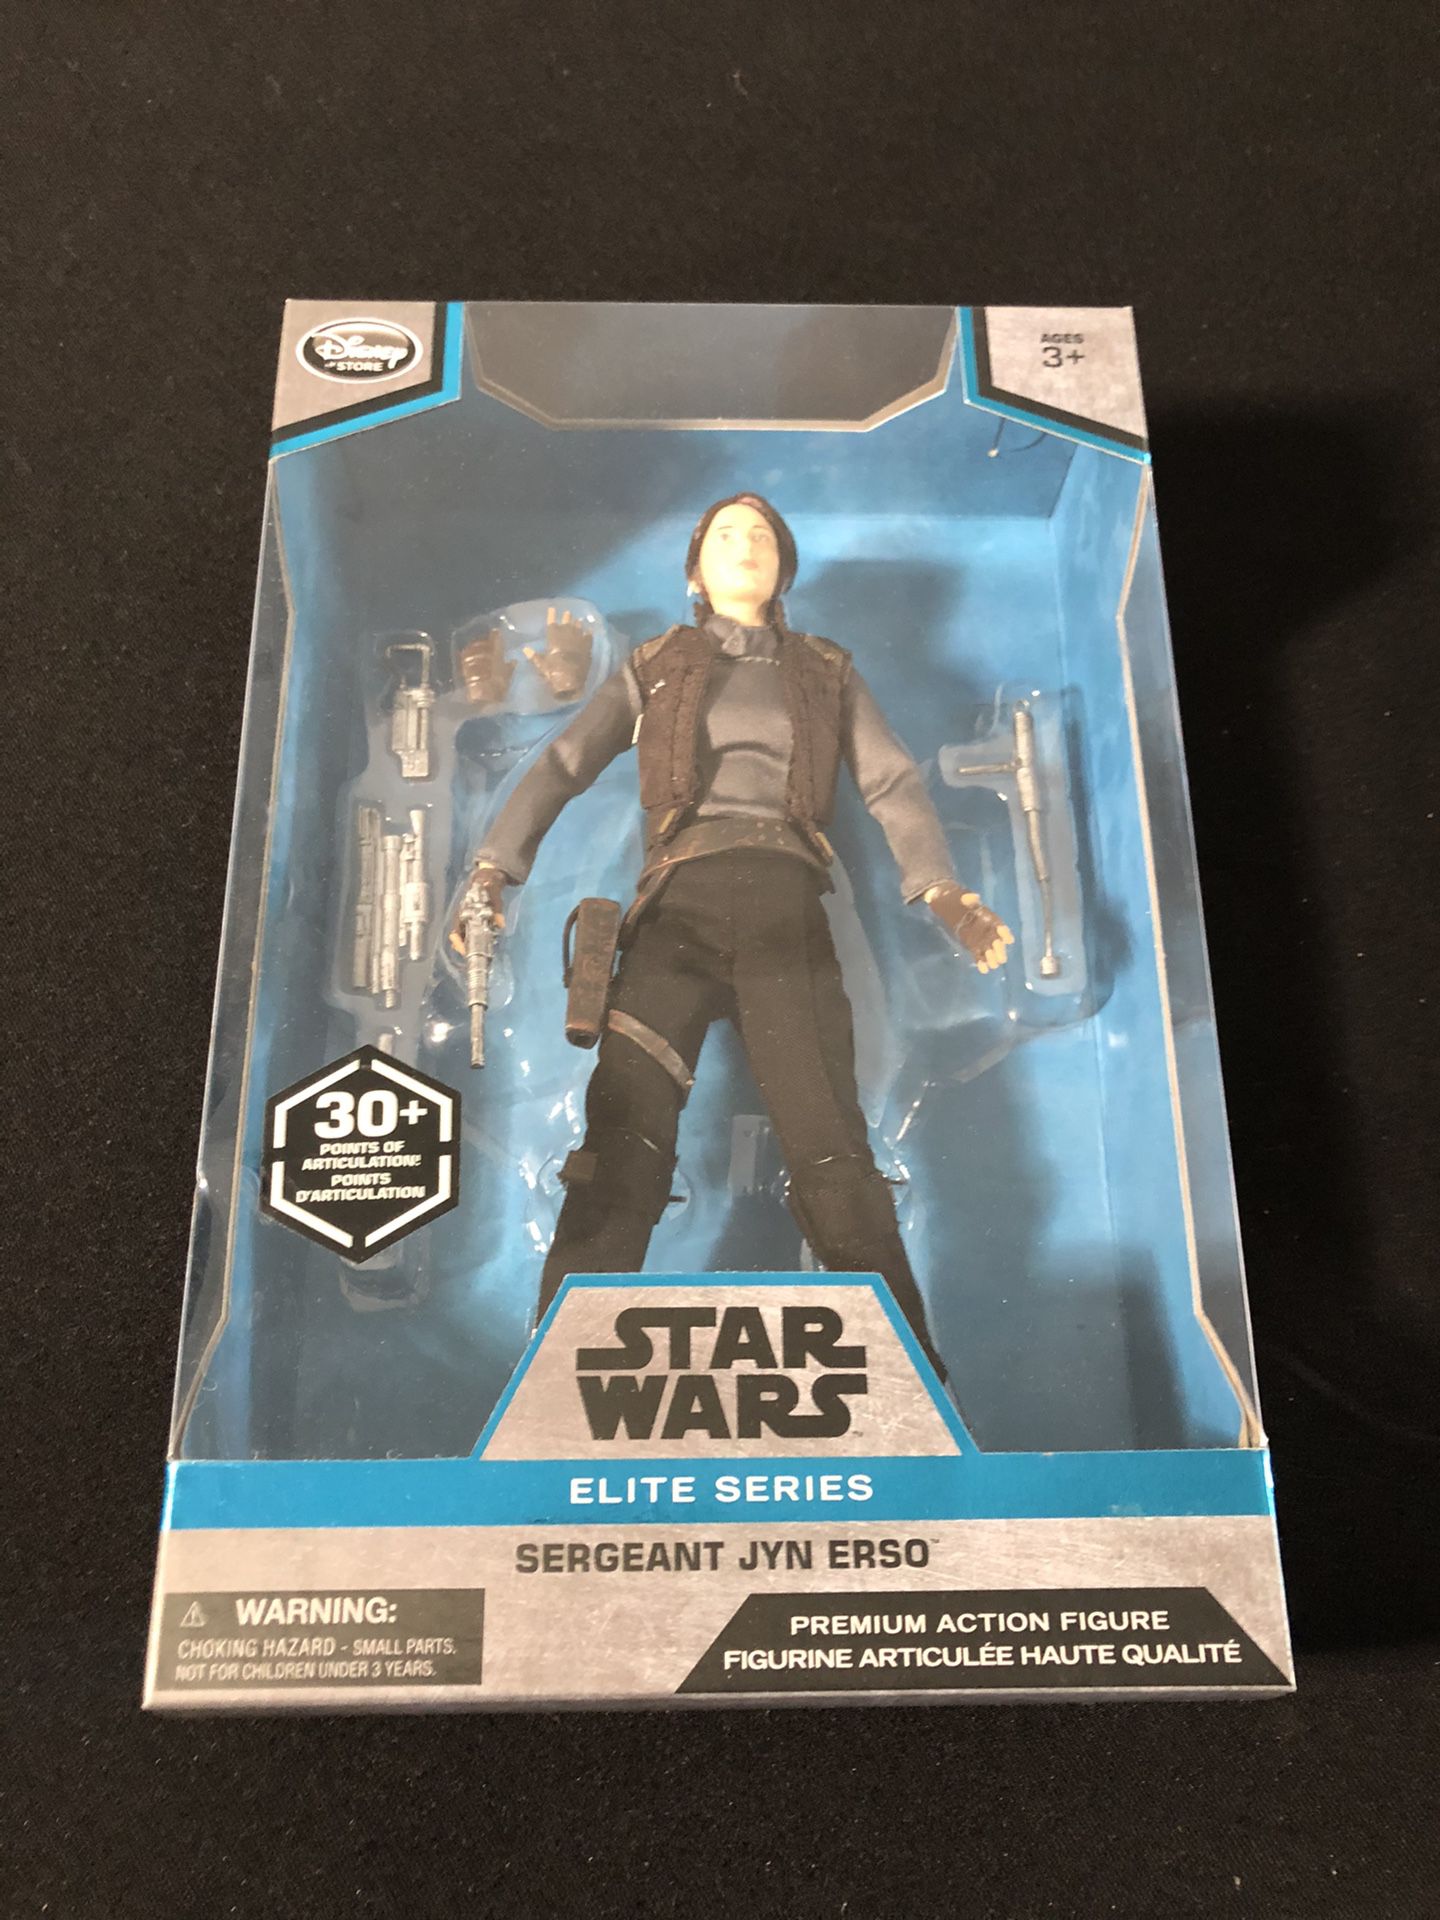 Stars Wars action figure elite series 10 inch sergeant Jyn Erso